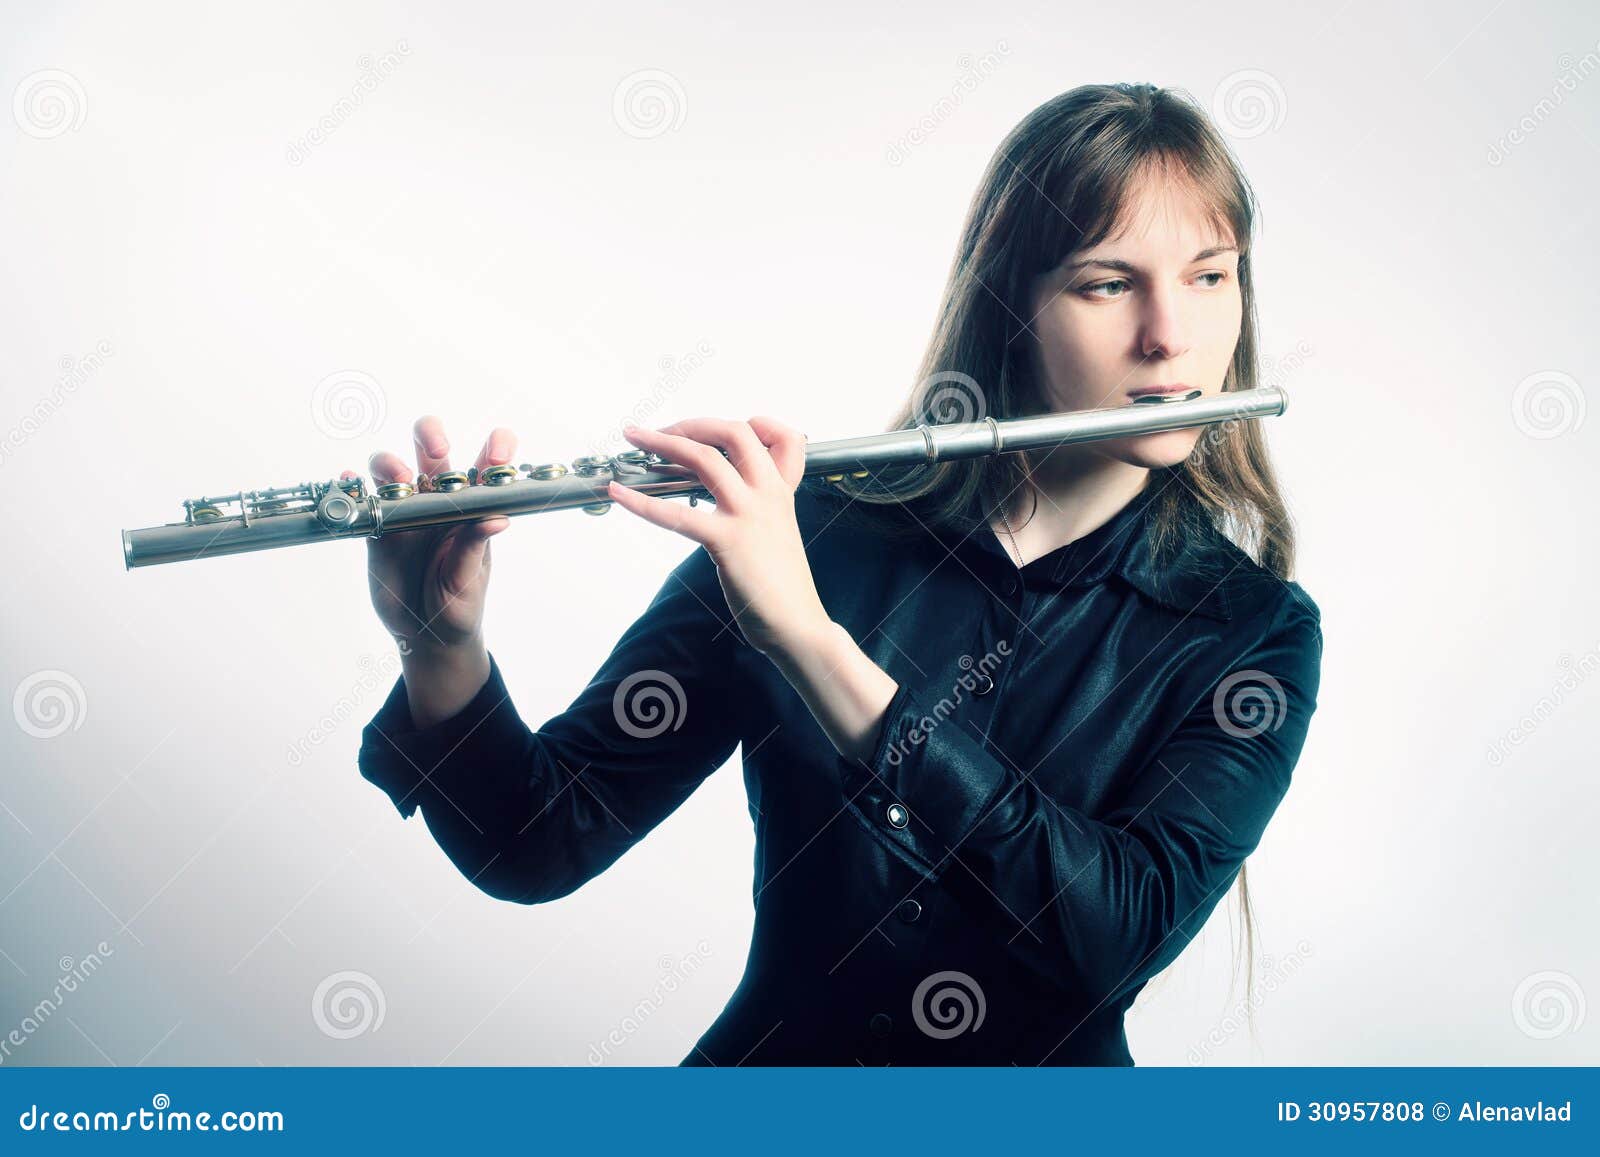 flute music instrument flutist musician playing